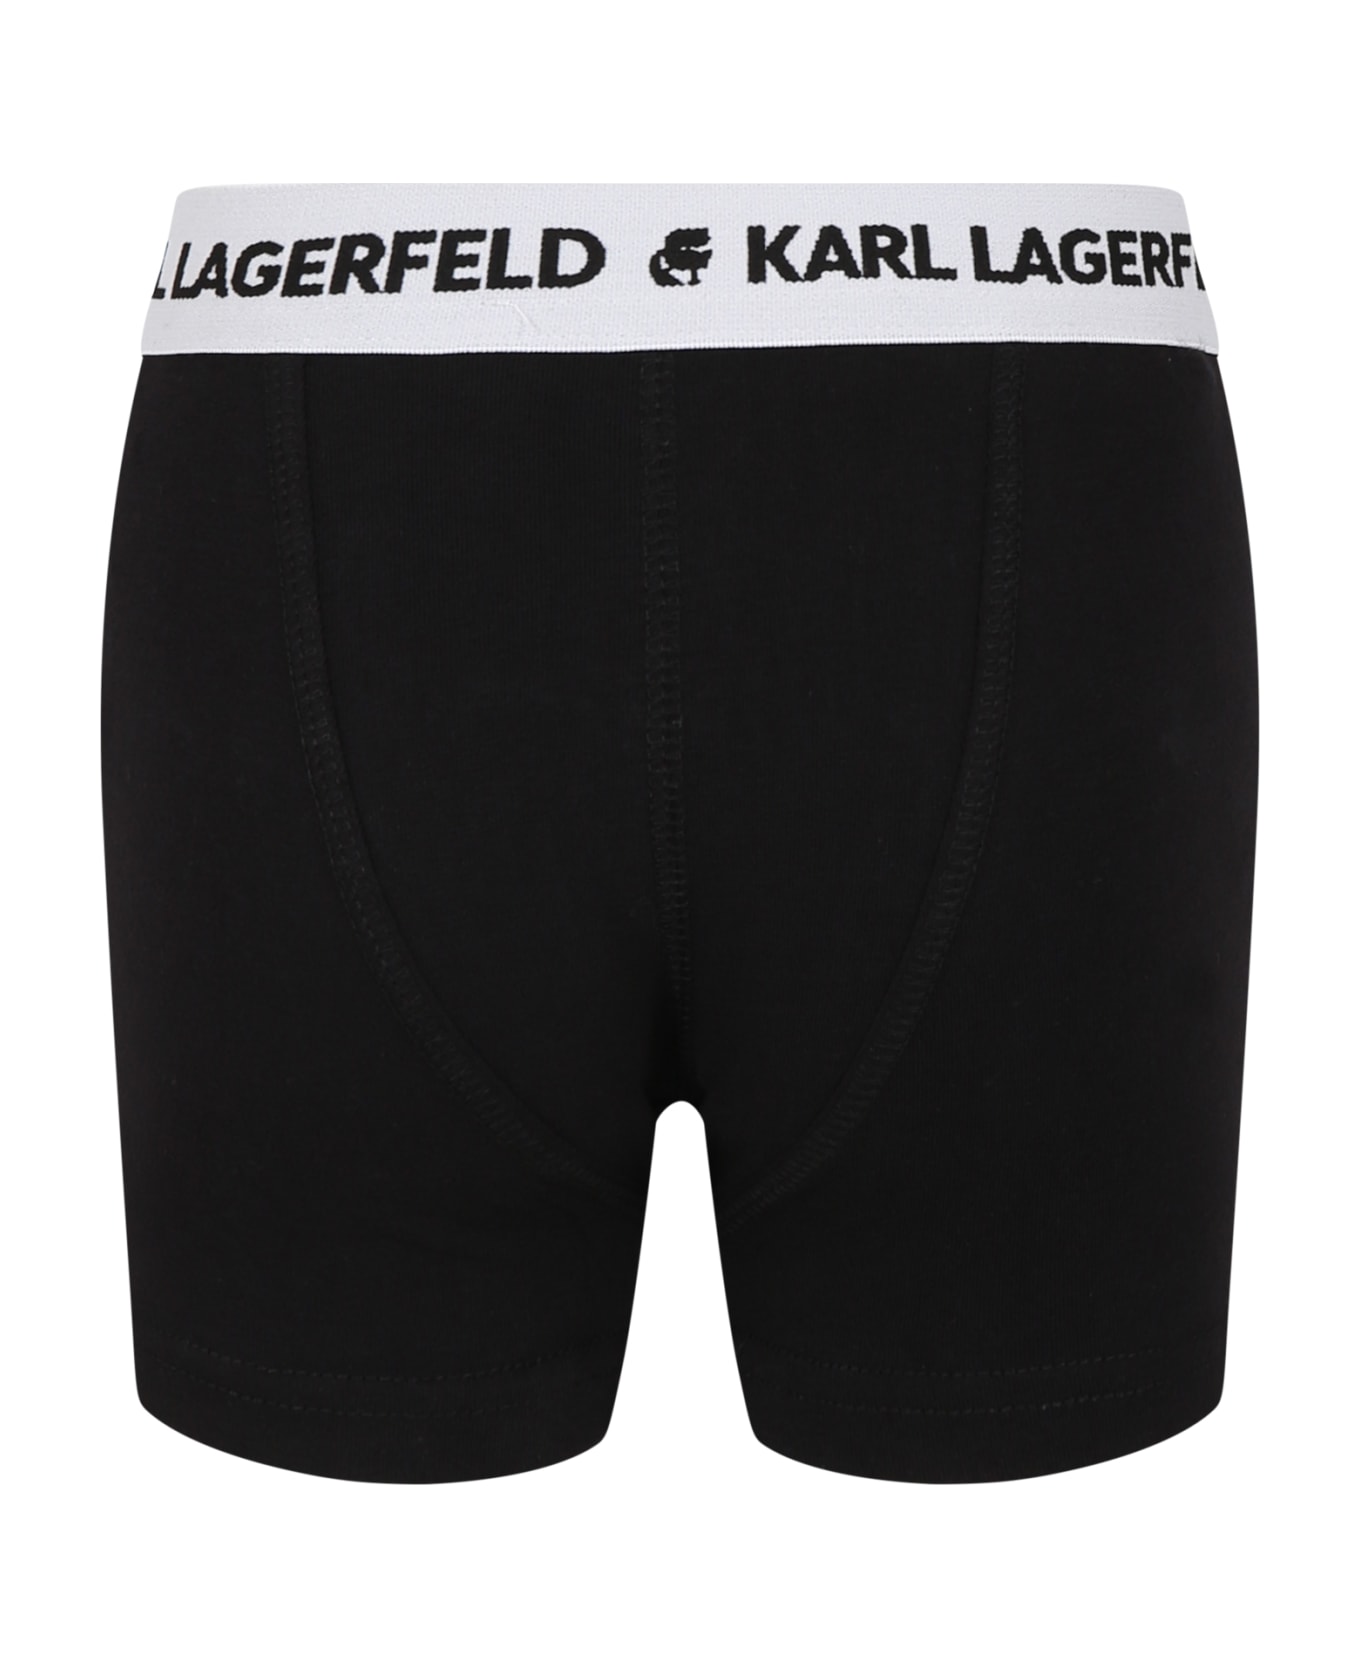 Karl Lagerfeld Kids Black Set For Boy With Logo - Black アンダーウェア